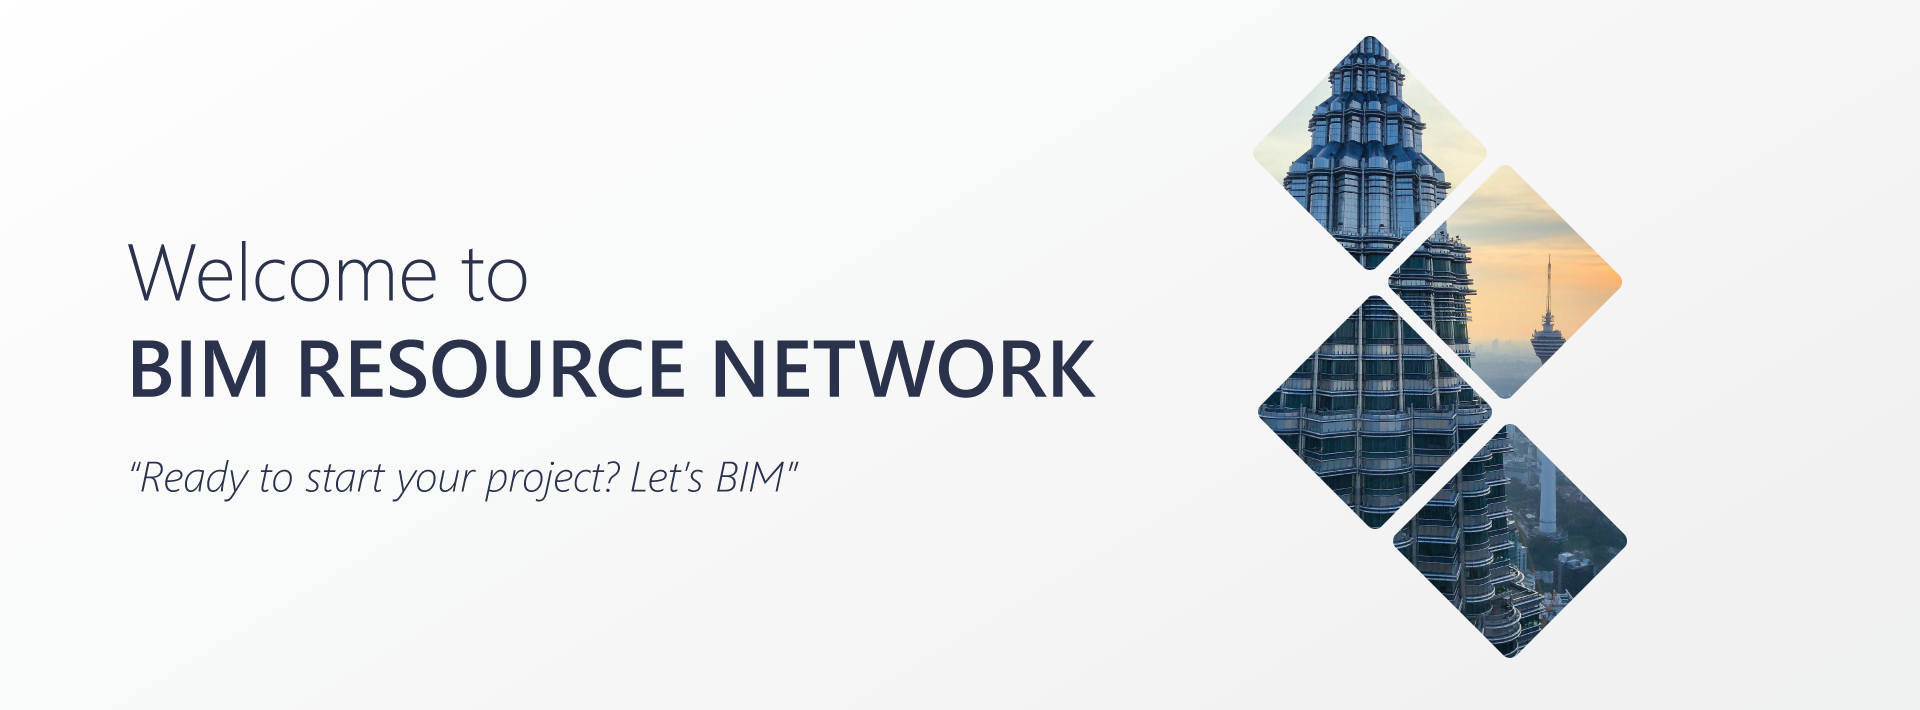 Welcome to BIM Resource Network